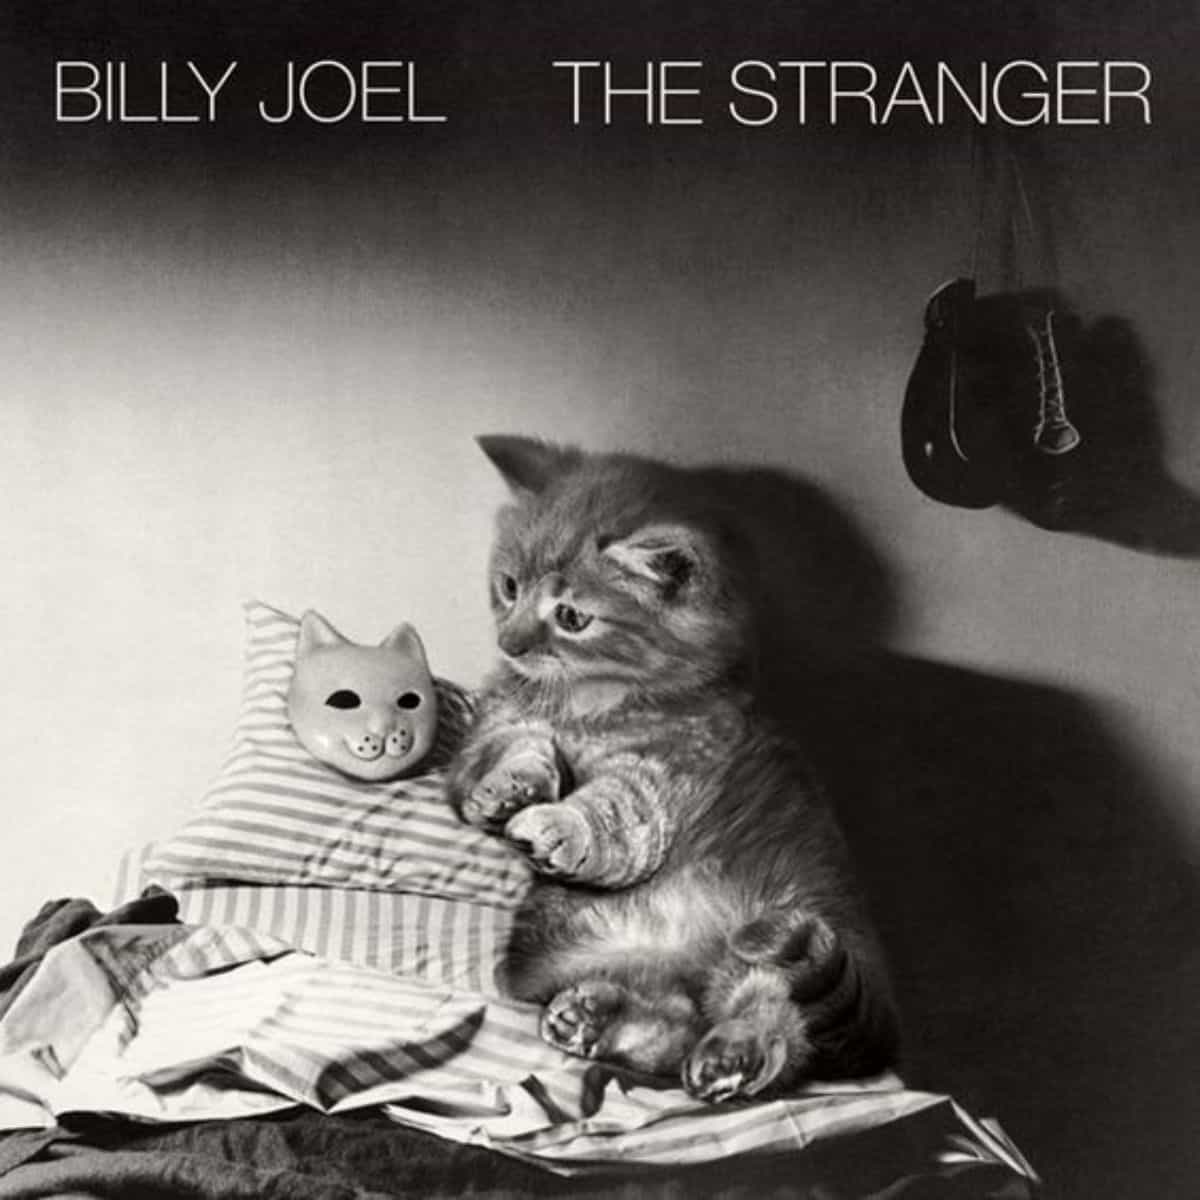 cat version of billy joel's album cover